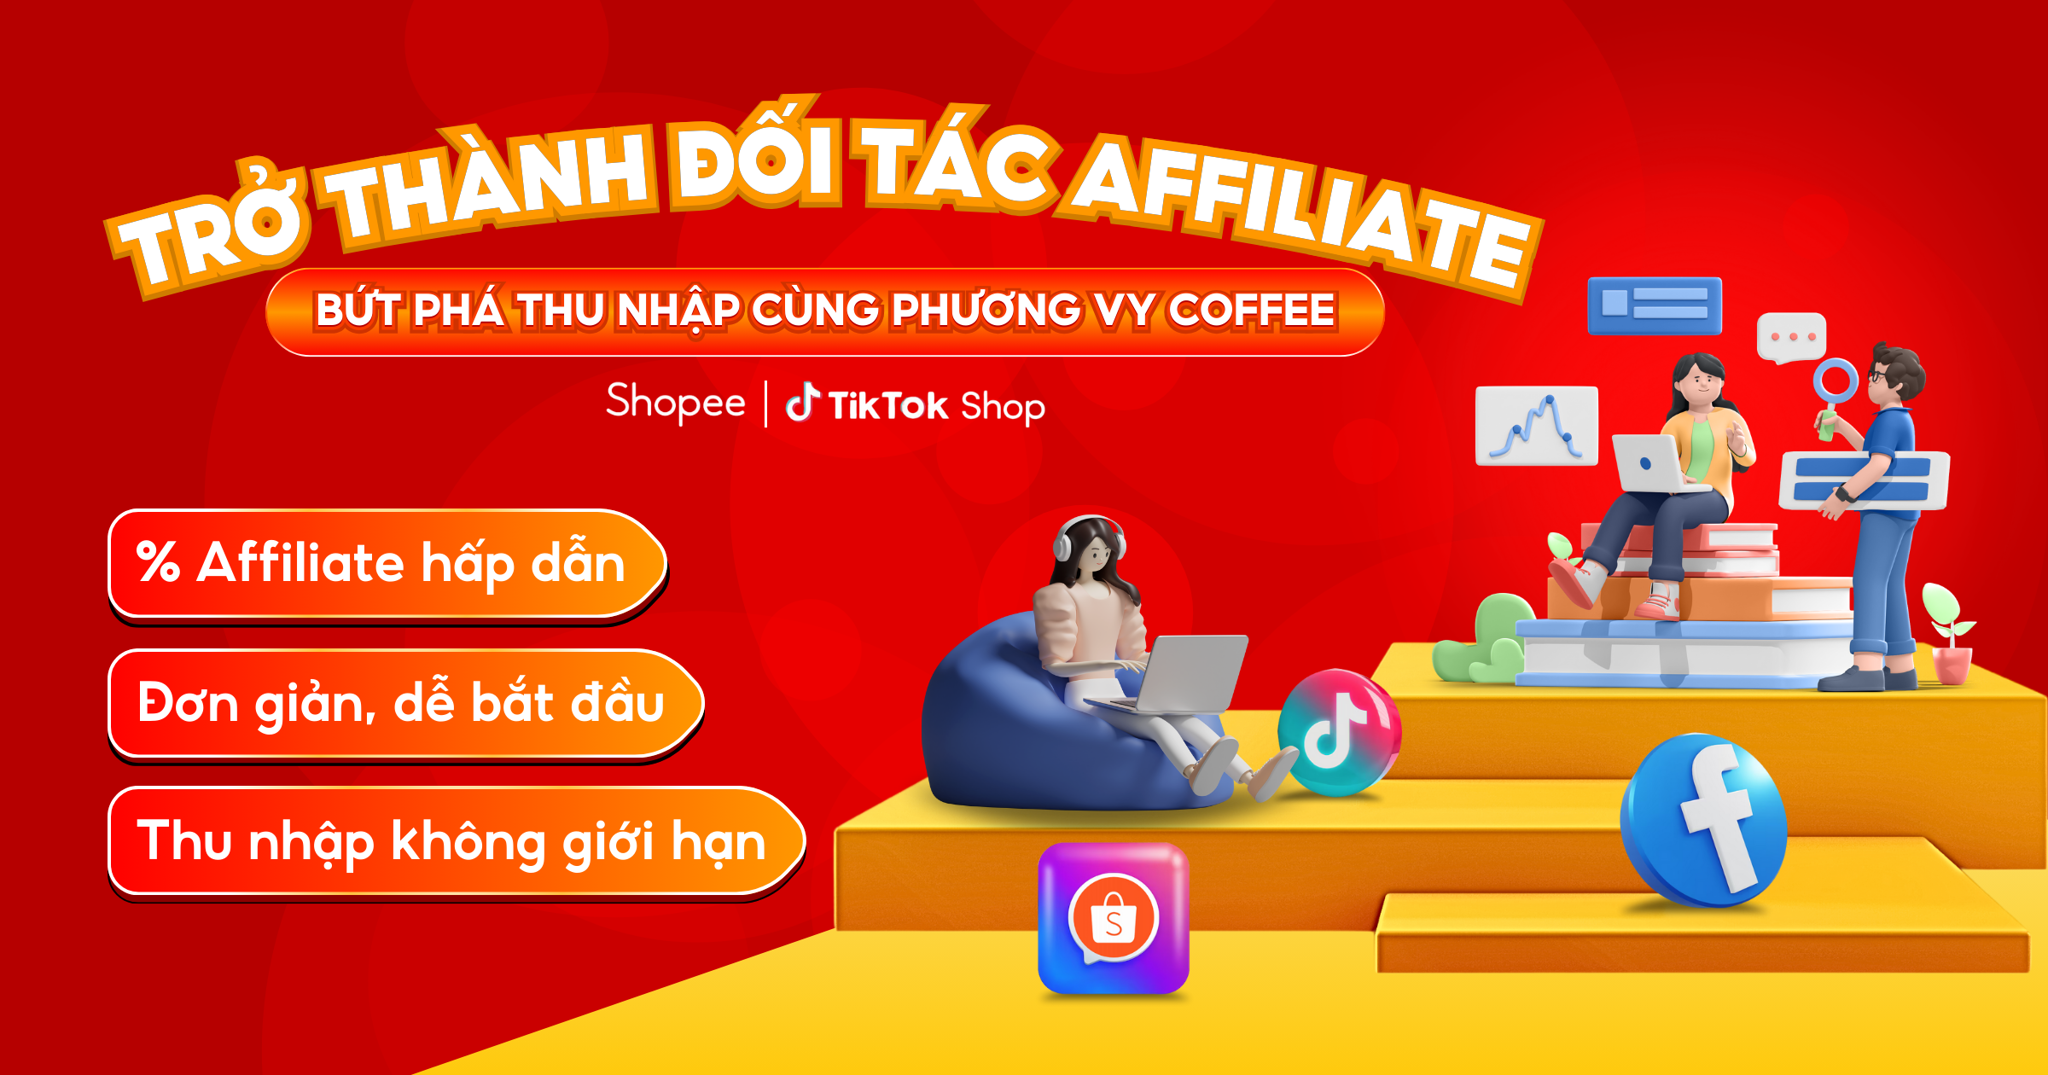 tro-thanh-doi-tac-affiliate-phuong-vy-coffee